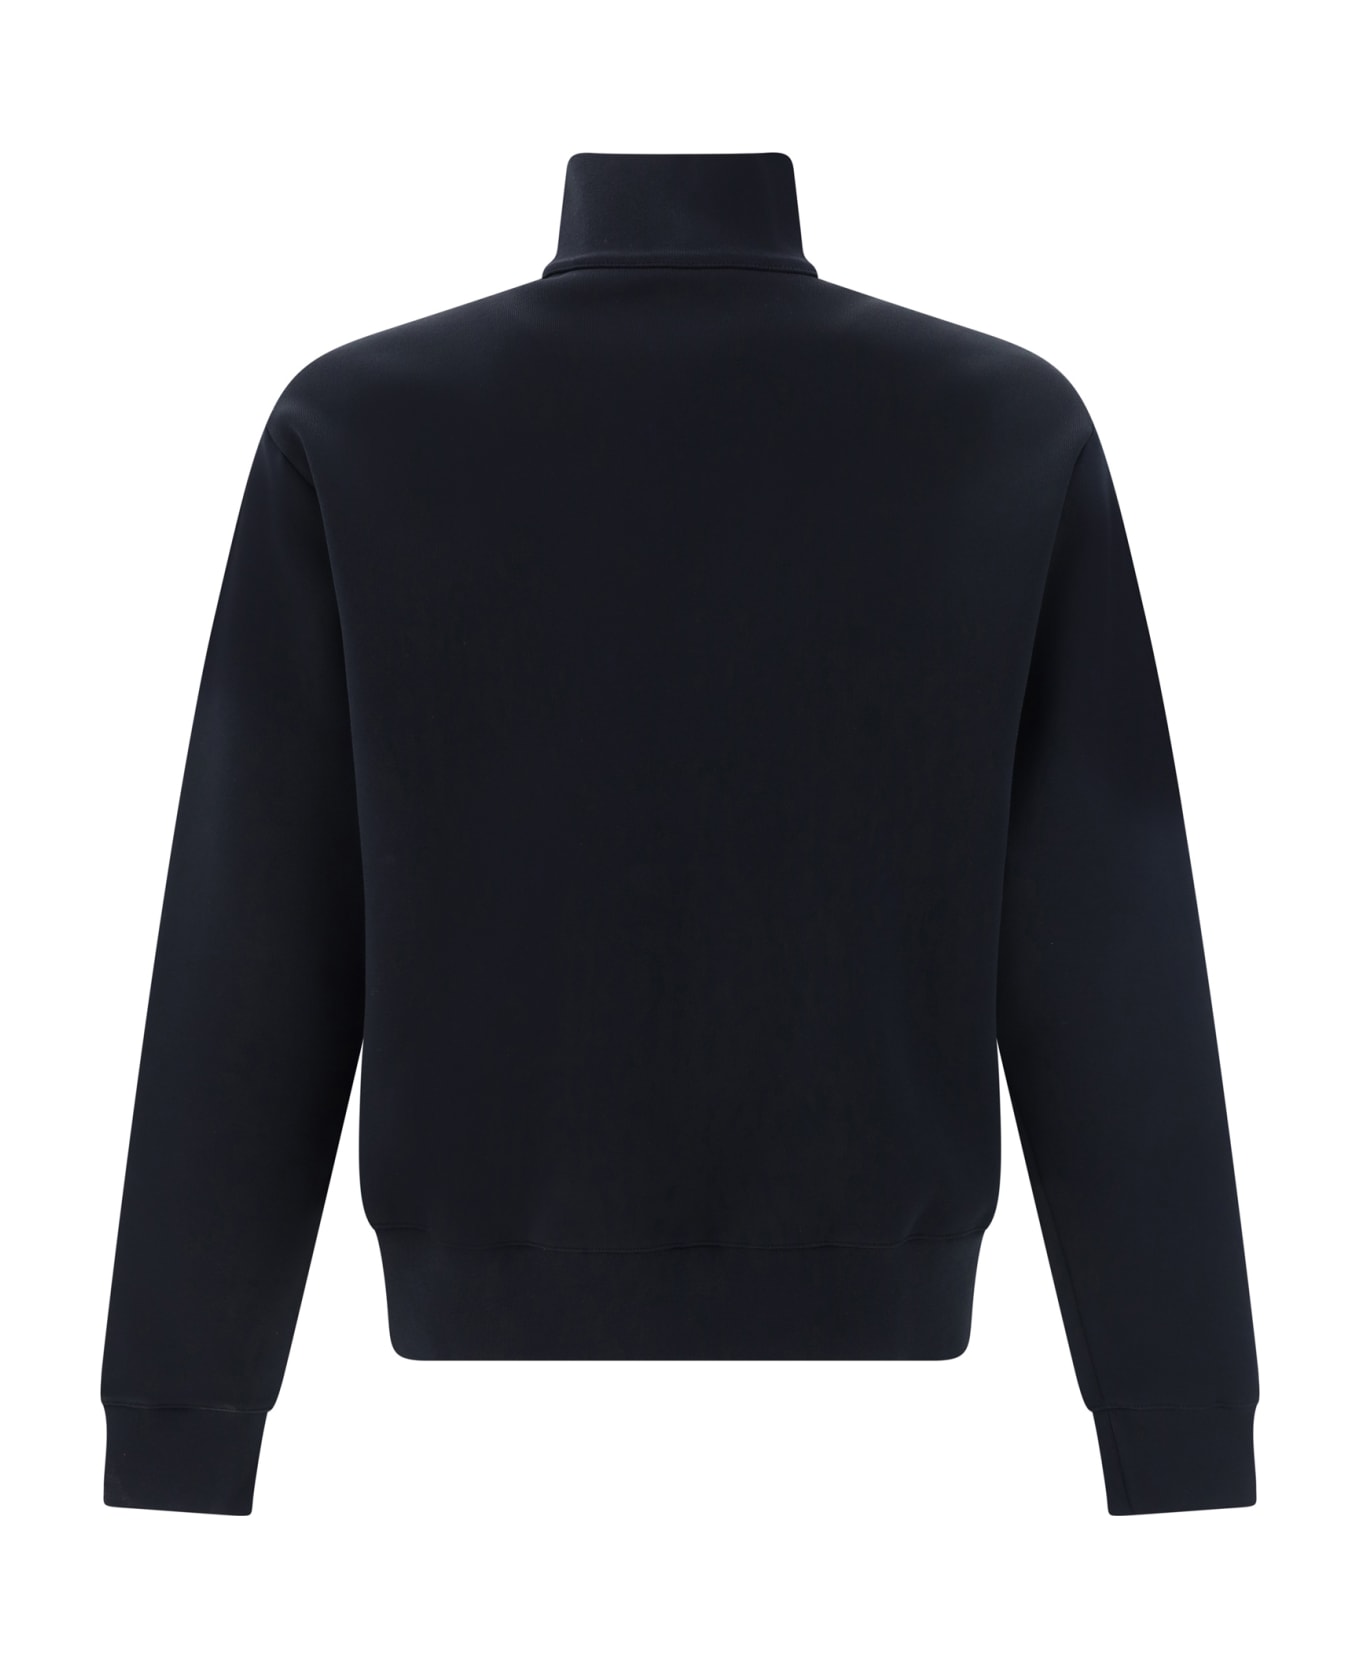 Burberry Zipper Sweatshirt - Black ニットウェア